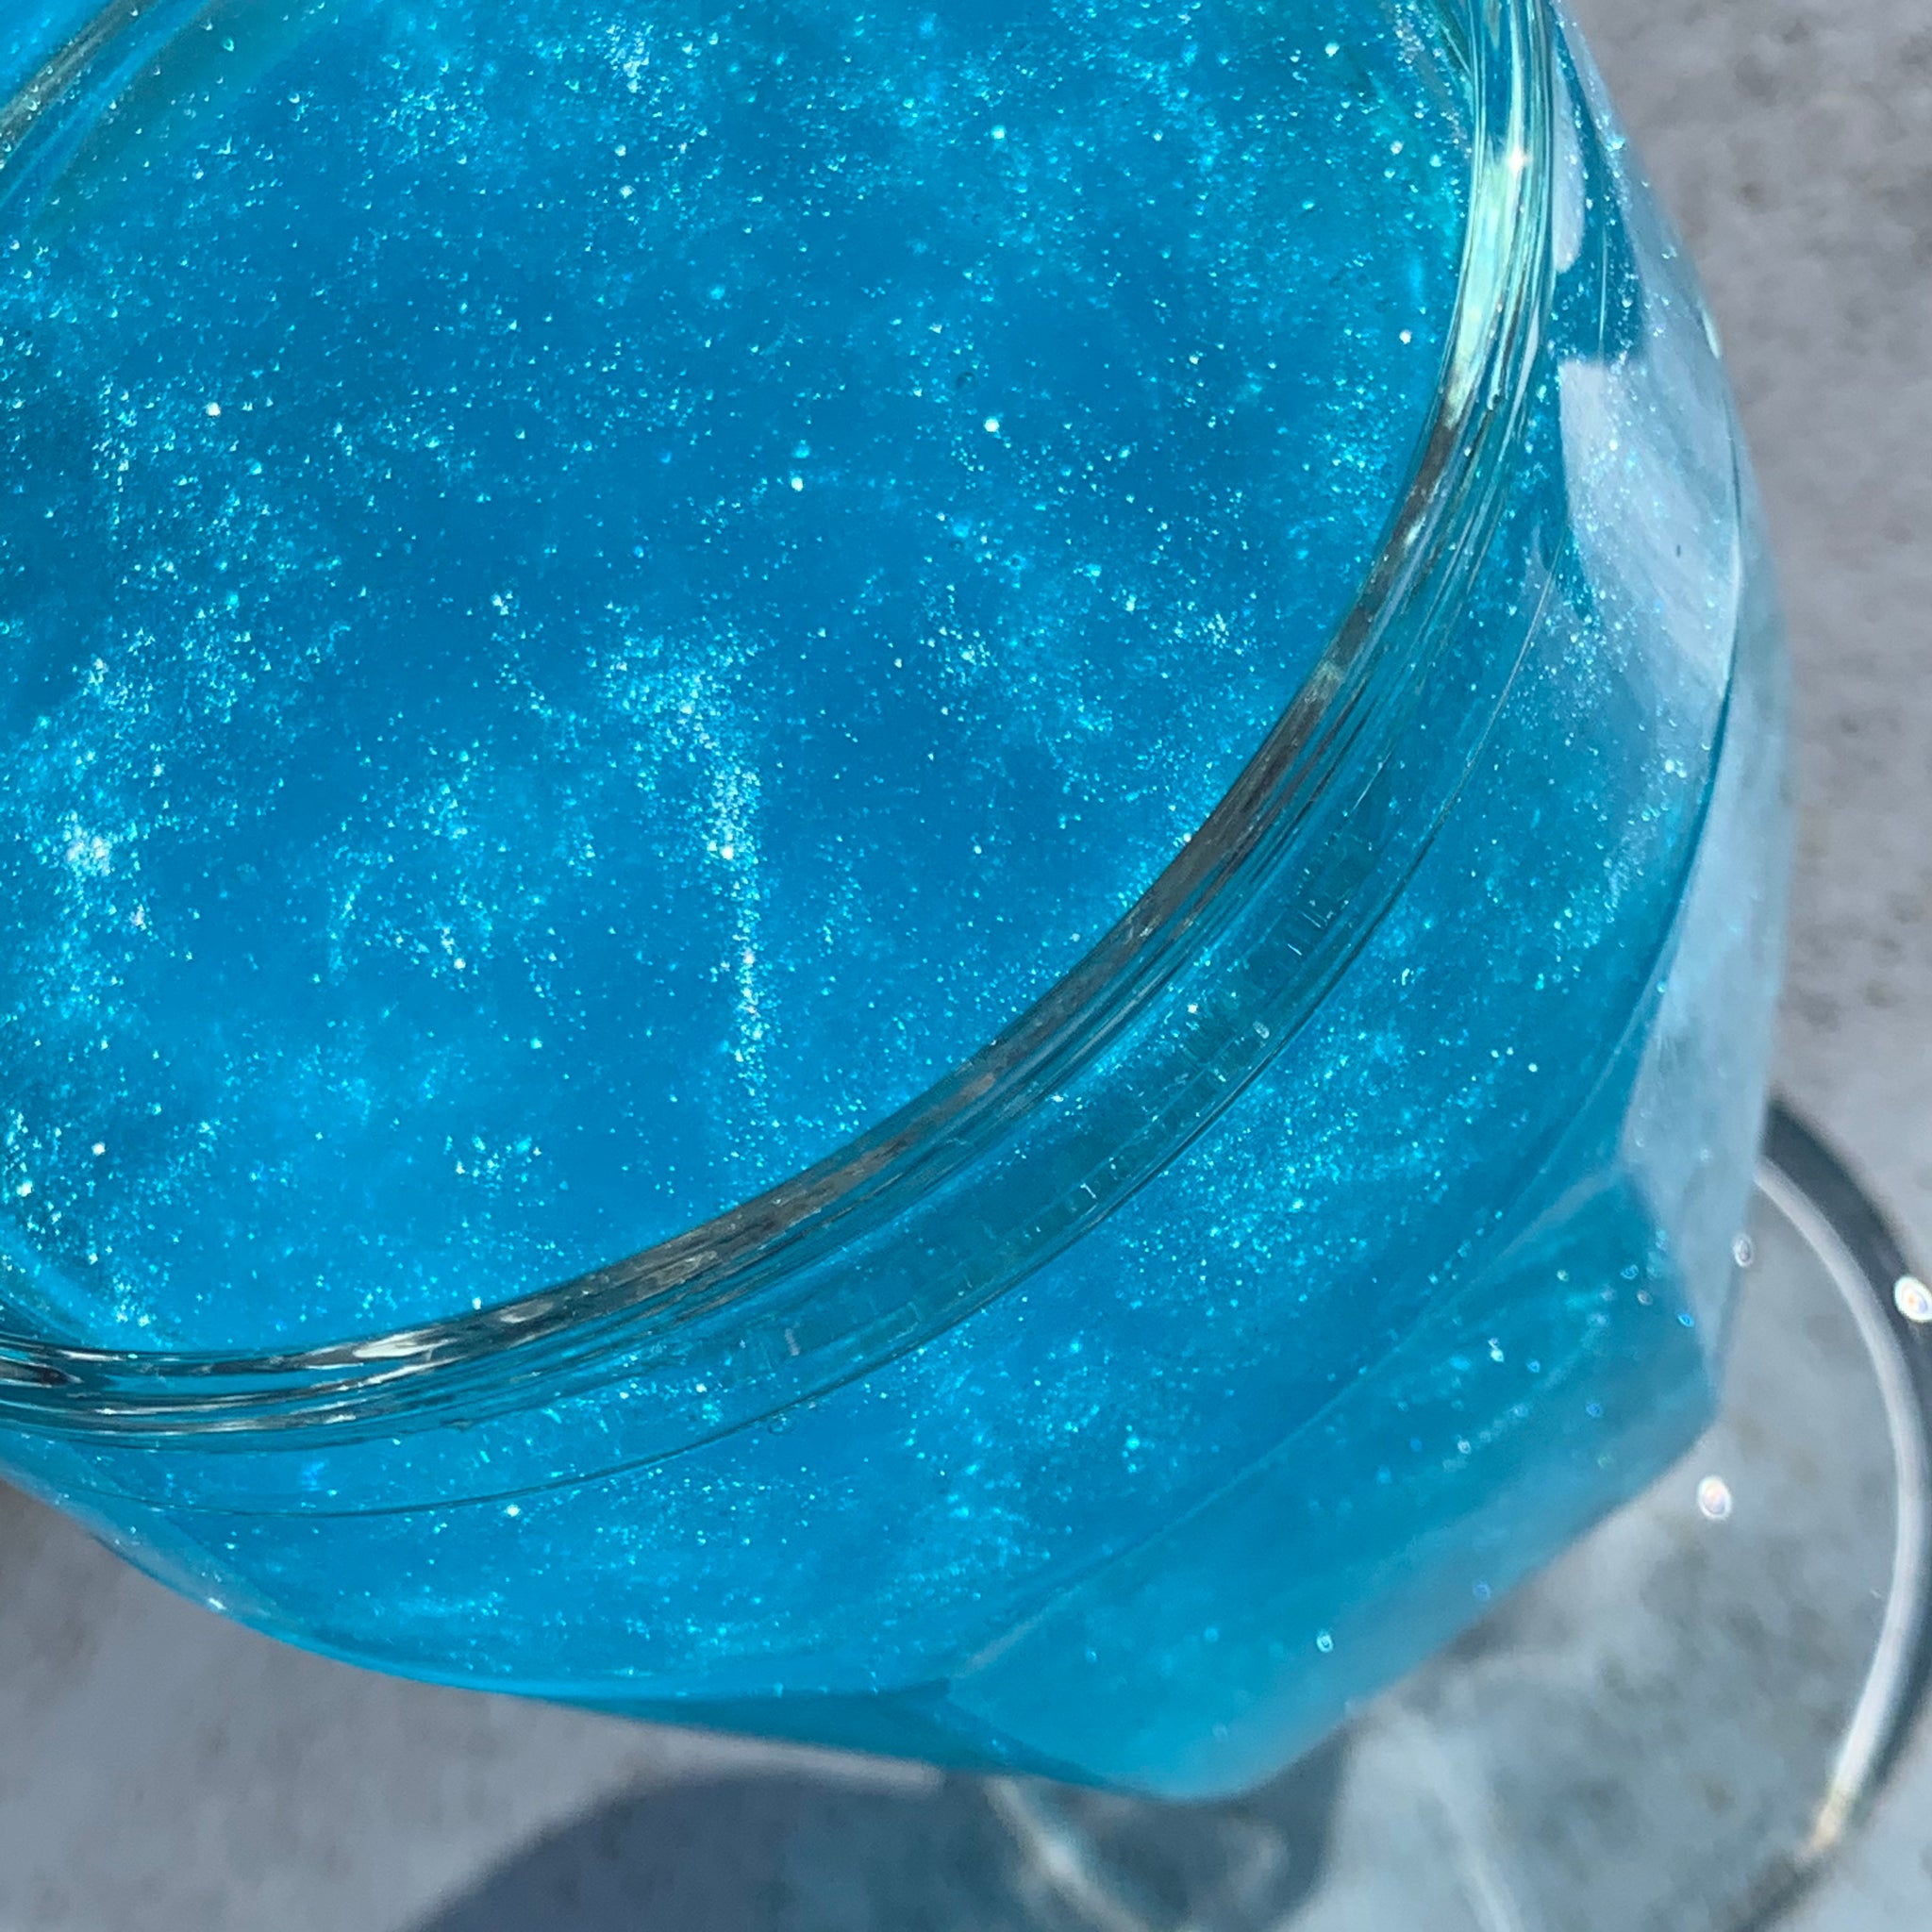 Shimmer Glitter™ Dust for Wine, Beer, Cocktails & Drinks FDA Compliant –  Signature Drink Lab